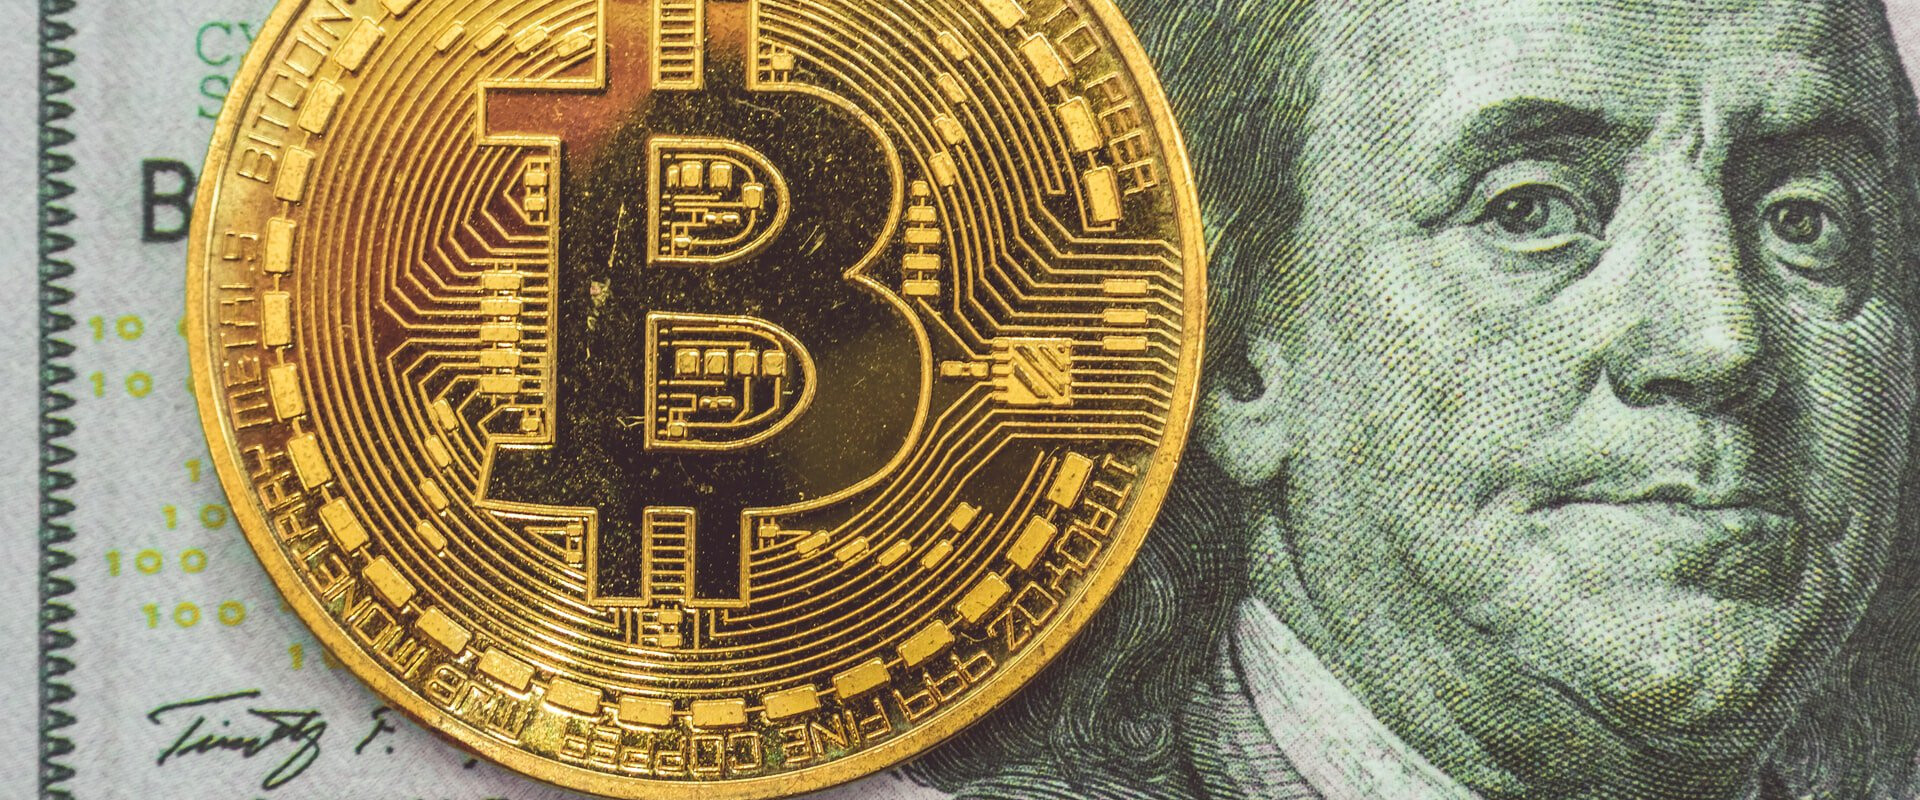 A bitcoin on top of a dollar bill